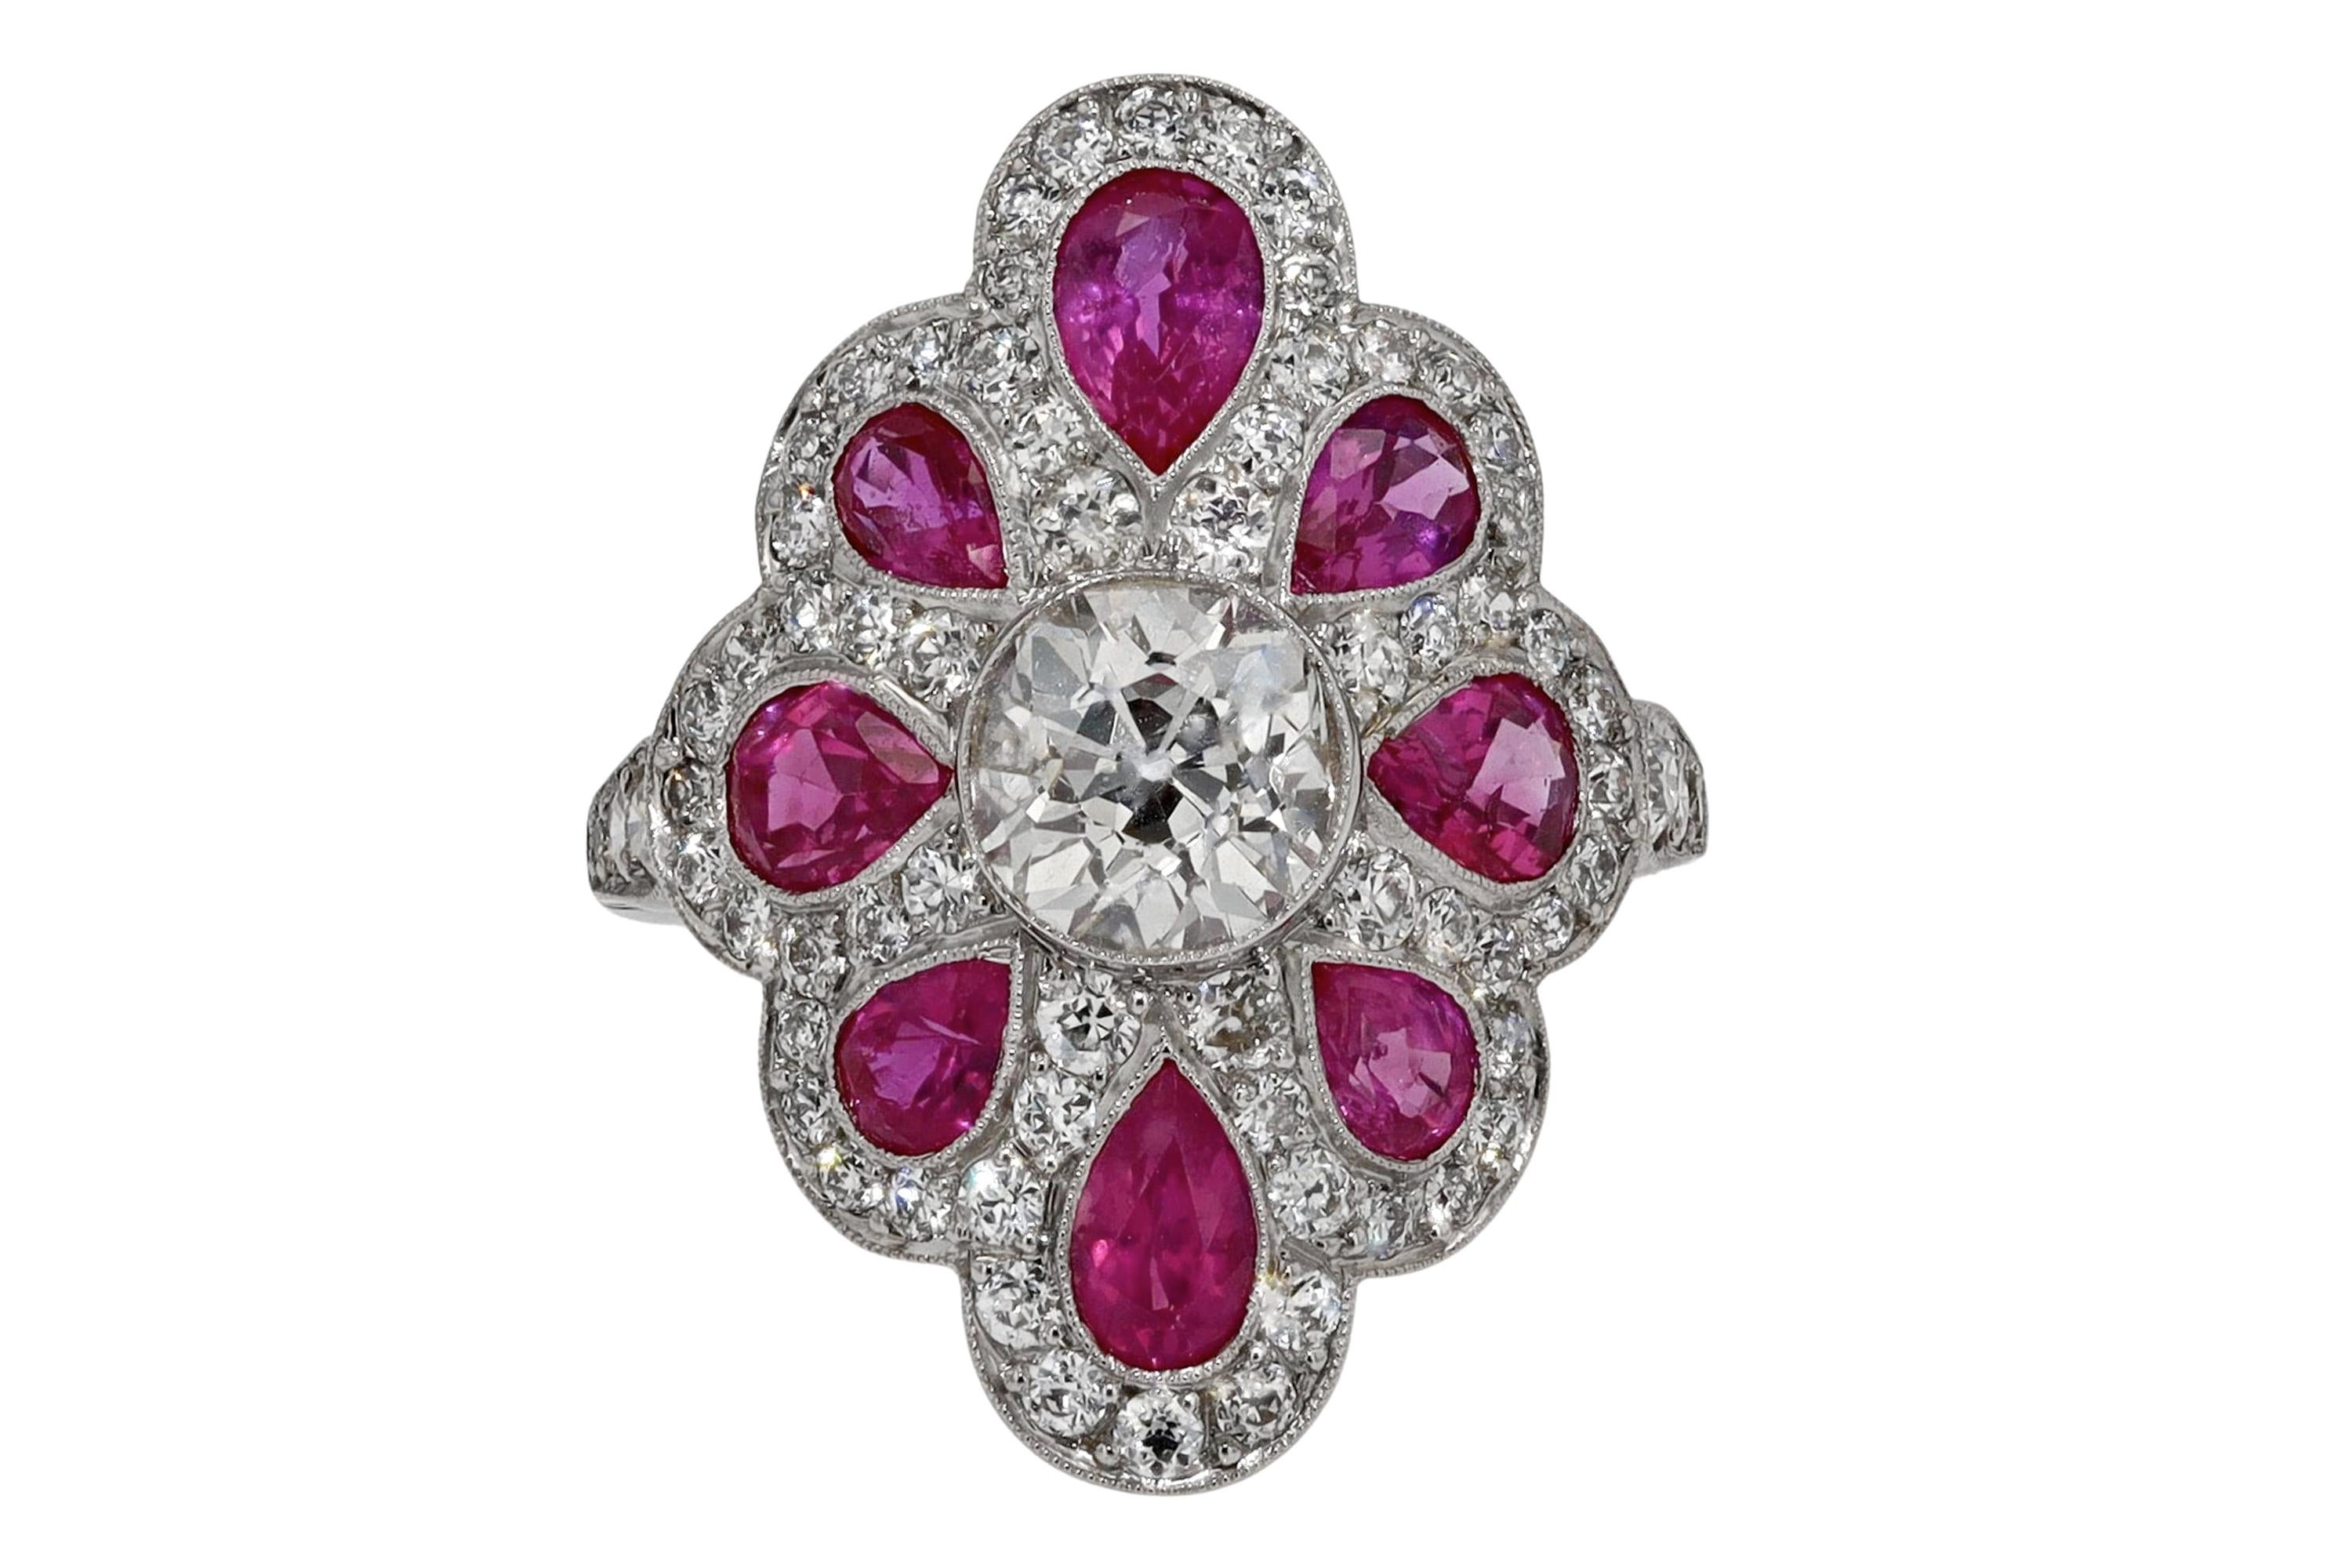 Women's Art Deco Style 1.47 Carat Antique Diamond Pink Sapphire Cocktail Ring For Sale